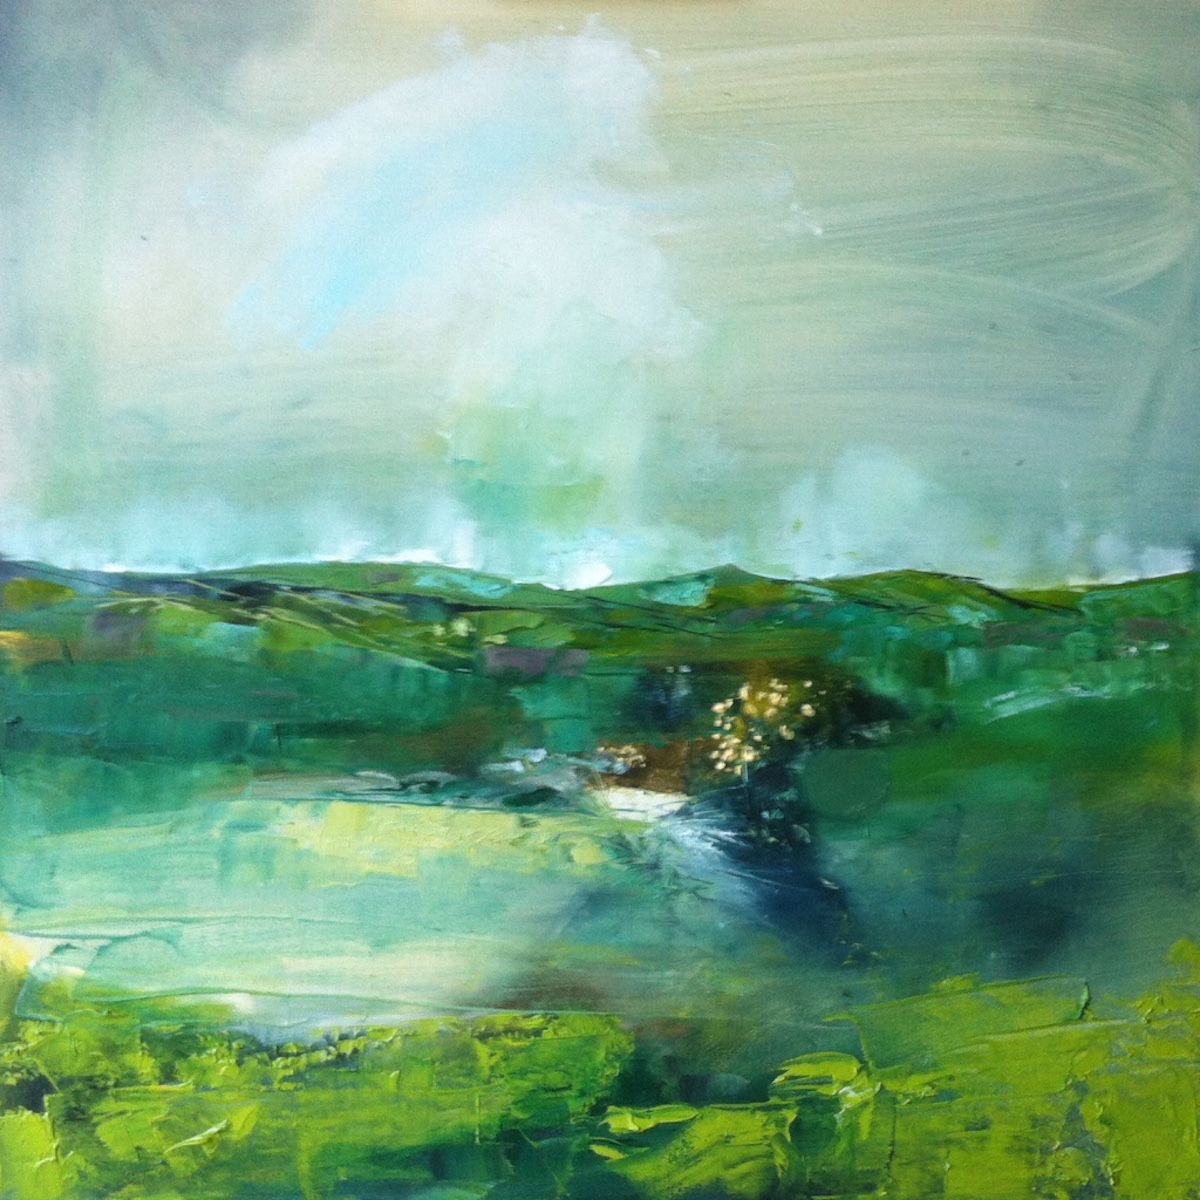 LLangollen Landscape by Ailleen Byrne